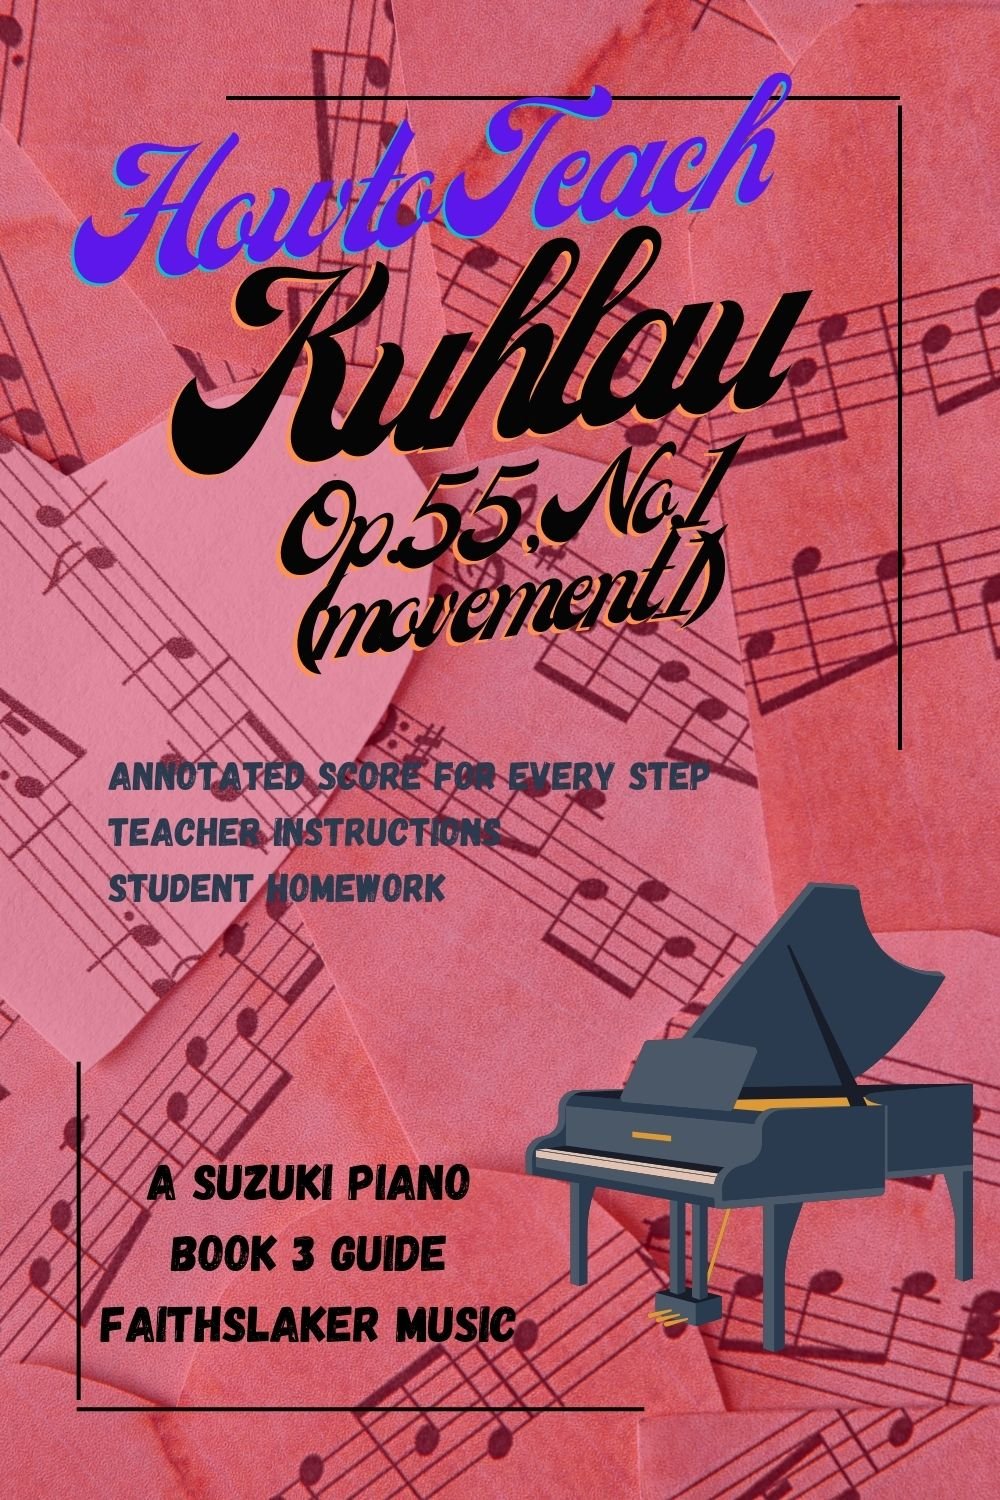 Suzuki Instruction: Kuhlau Op. 55, No. 1, Movement 1